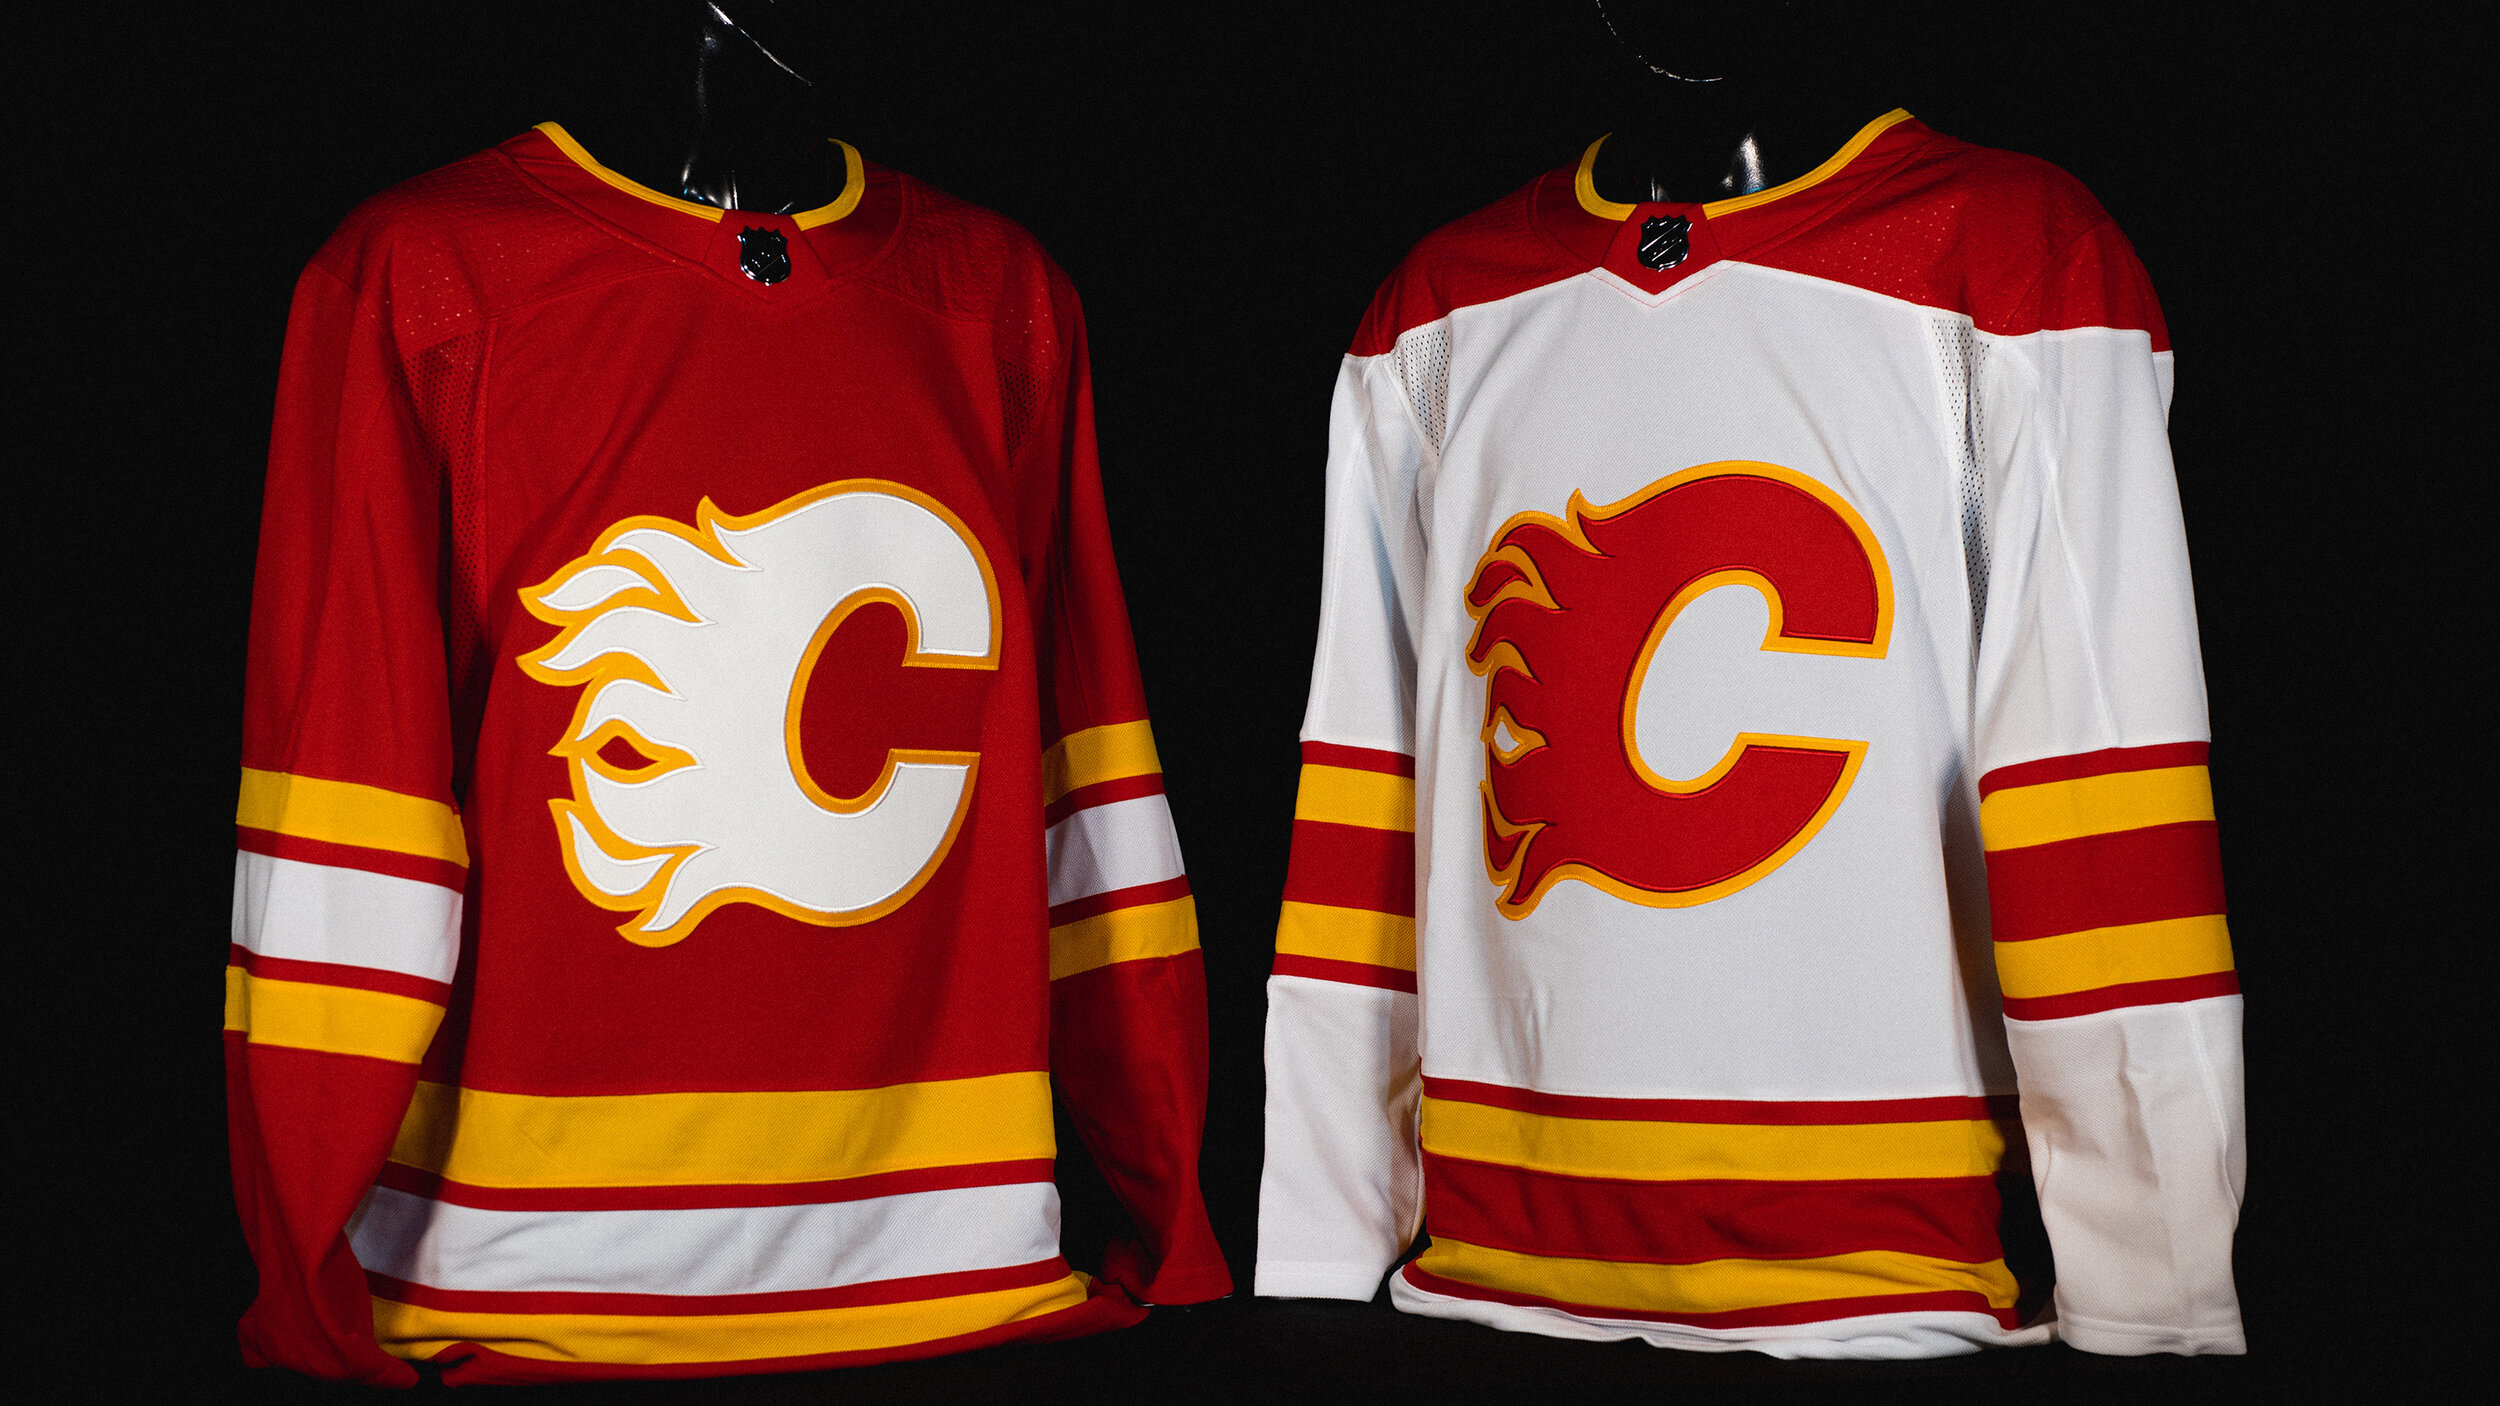 Calgary Flames Vintage in Calgary Flames Team Shop 